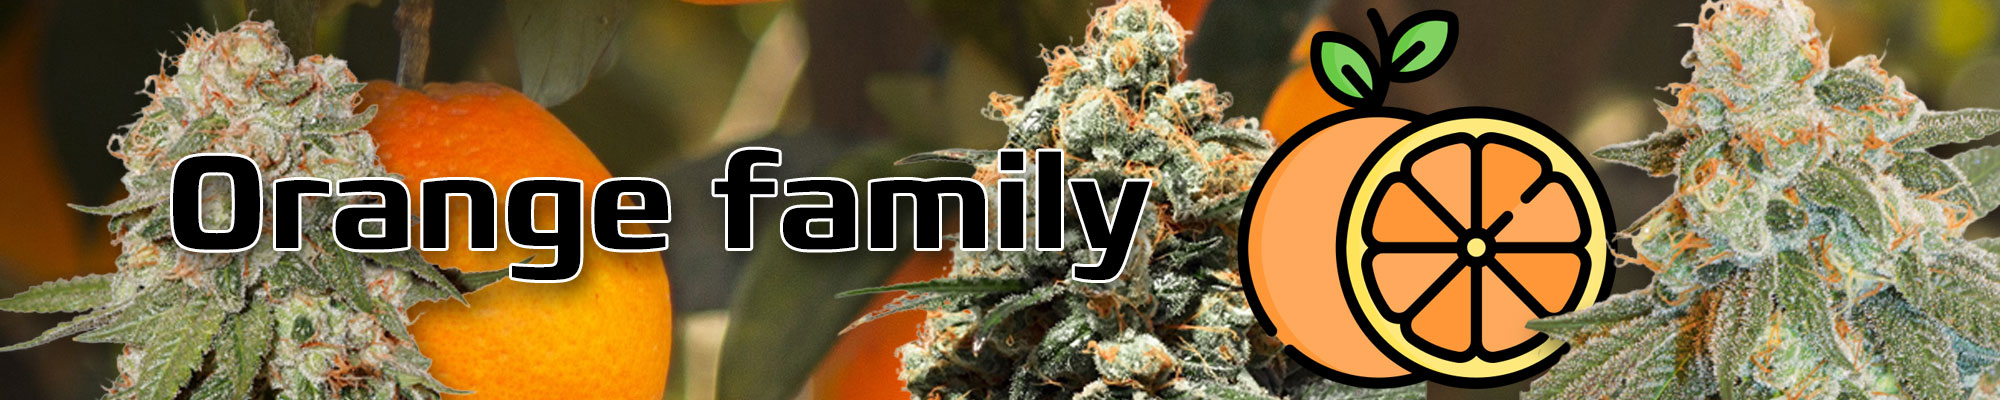 Orange family of cannabis